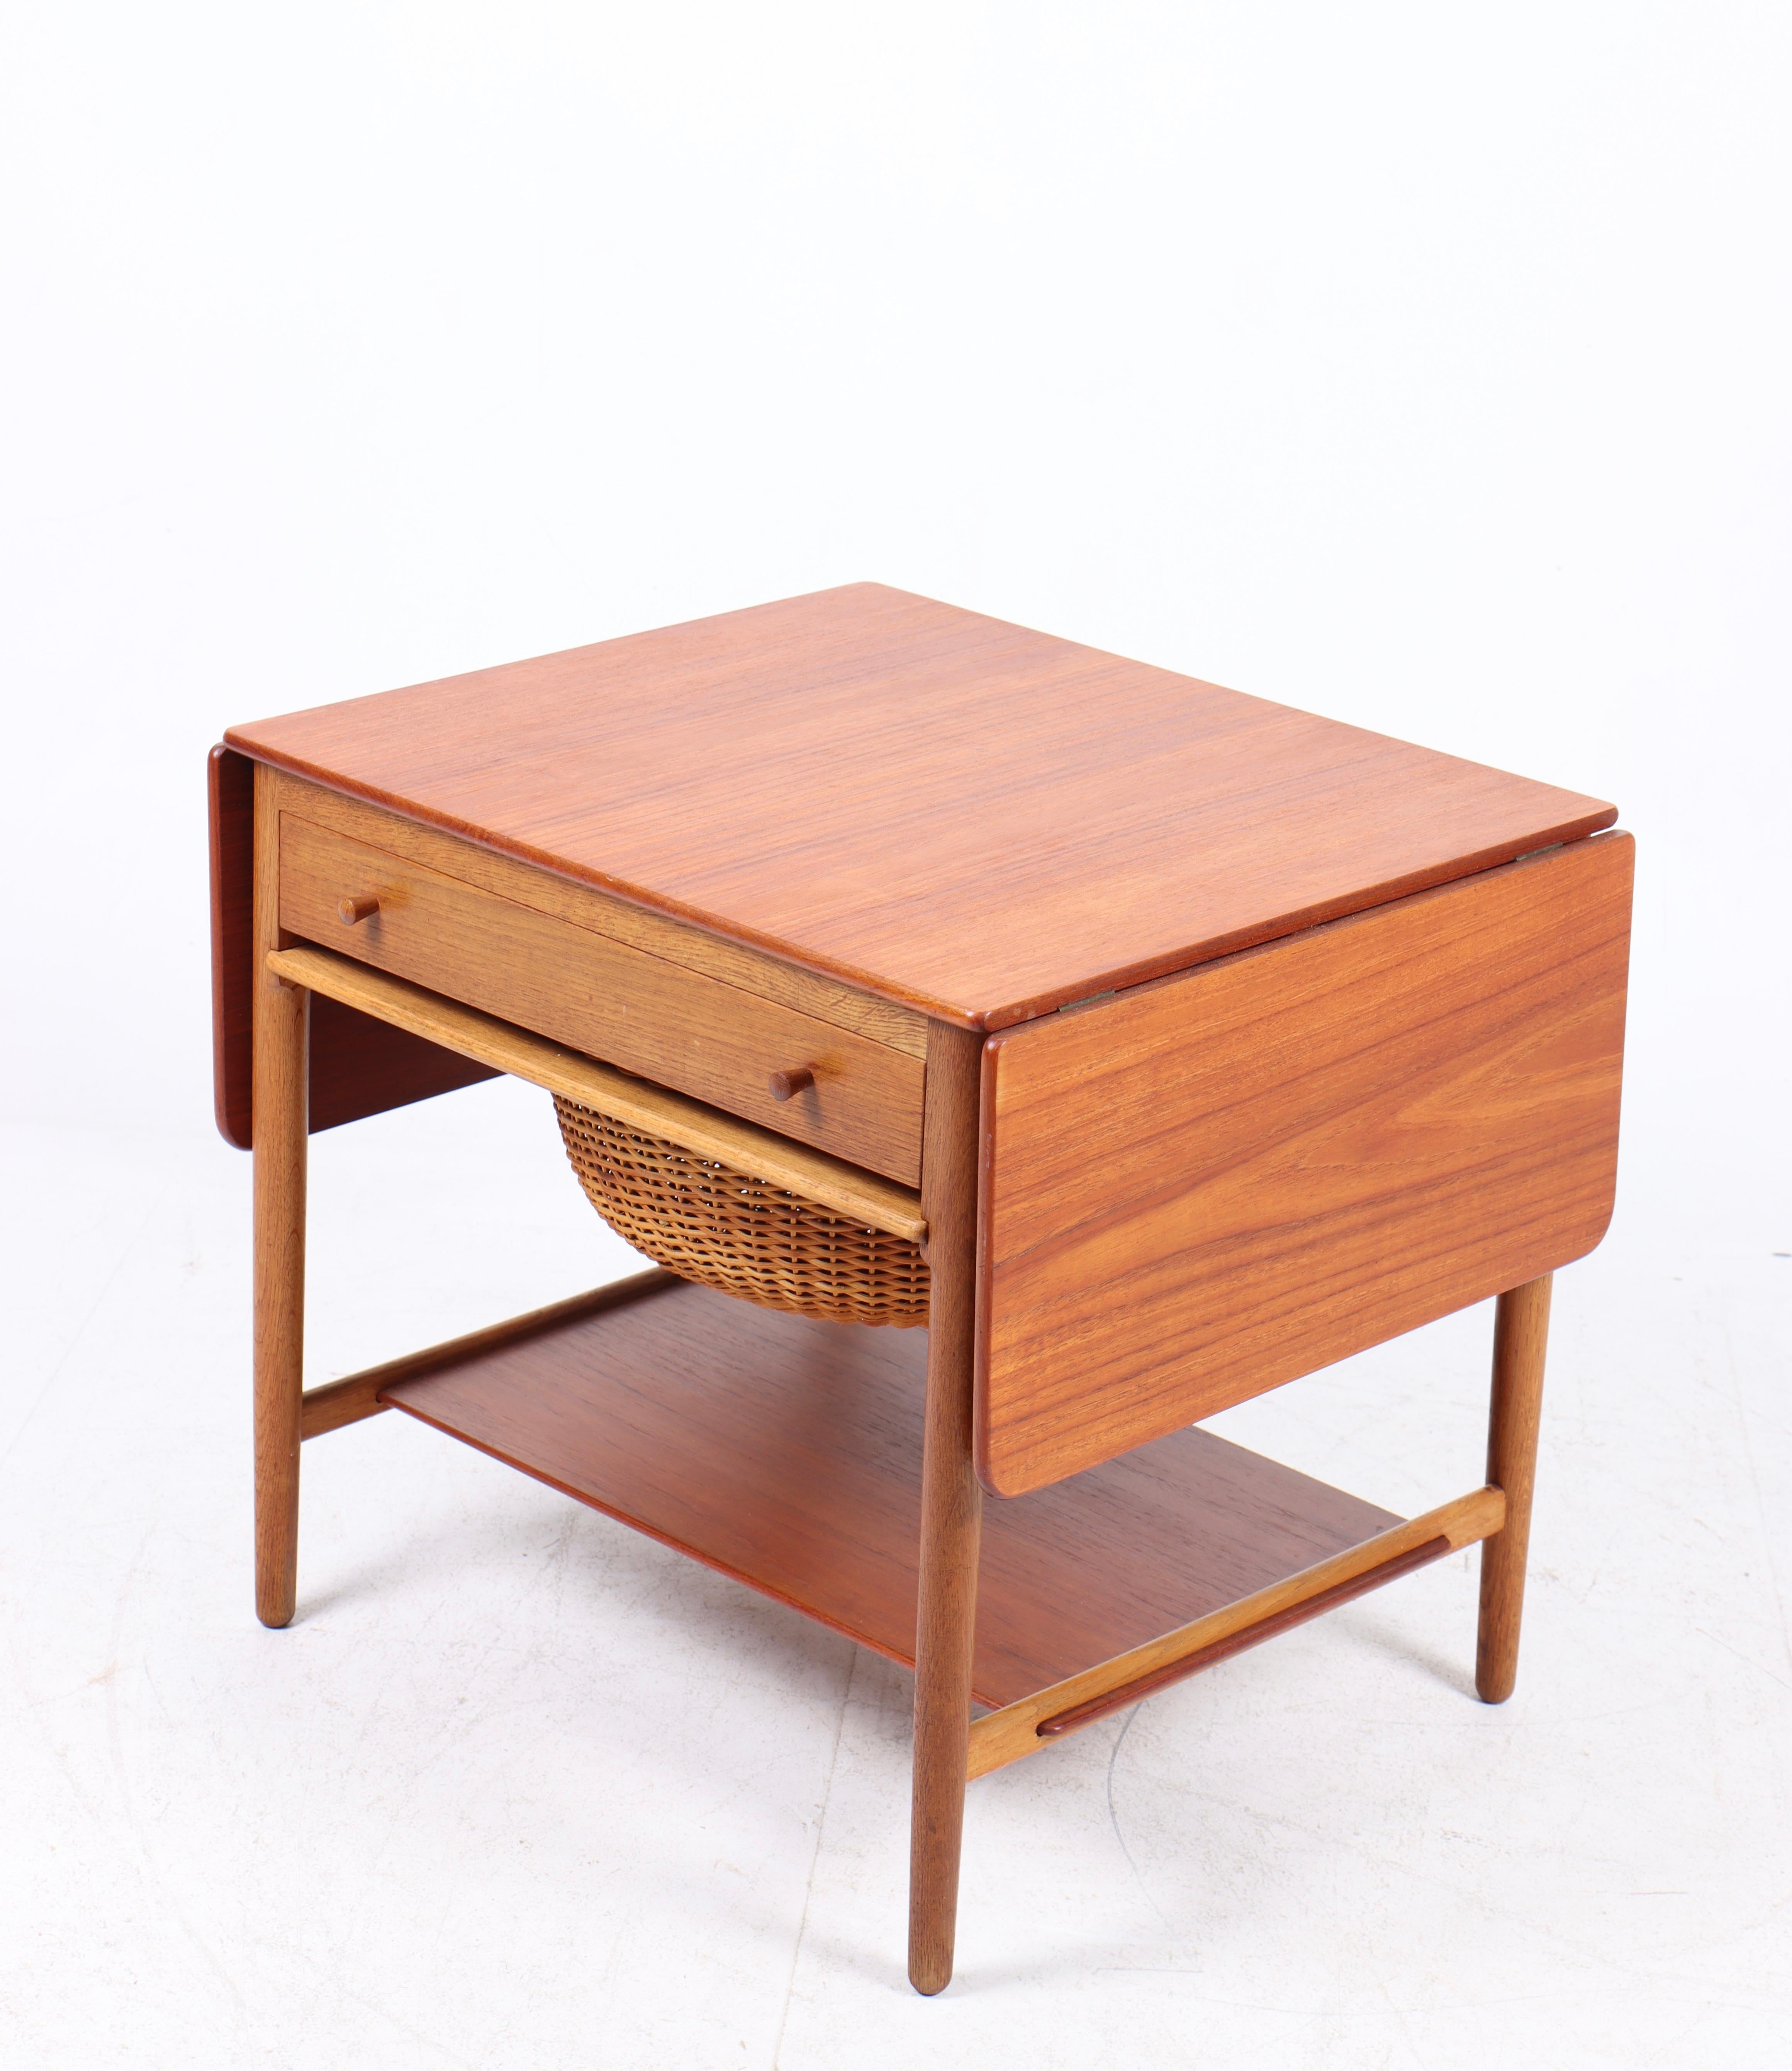 Scandinavian Modern Midcentury Sewing Table Teak and Oak by Wegner, Danish Design, 1950s